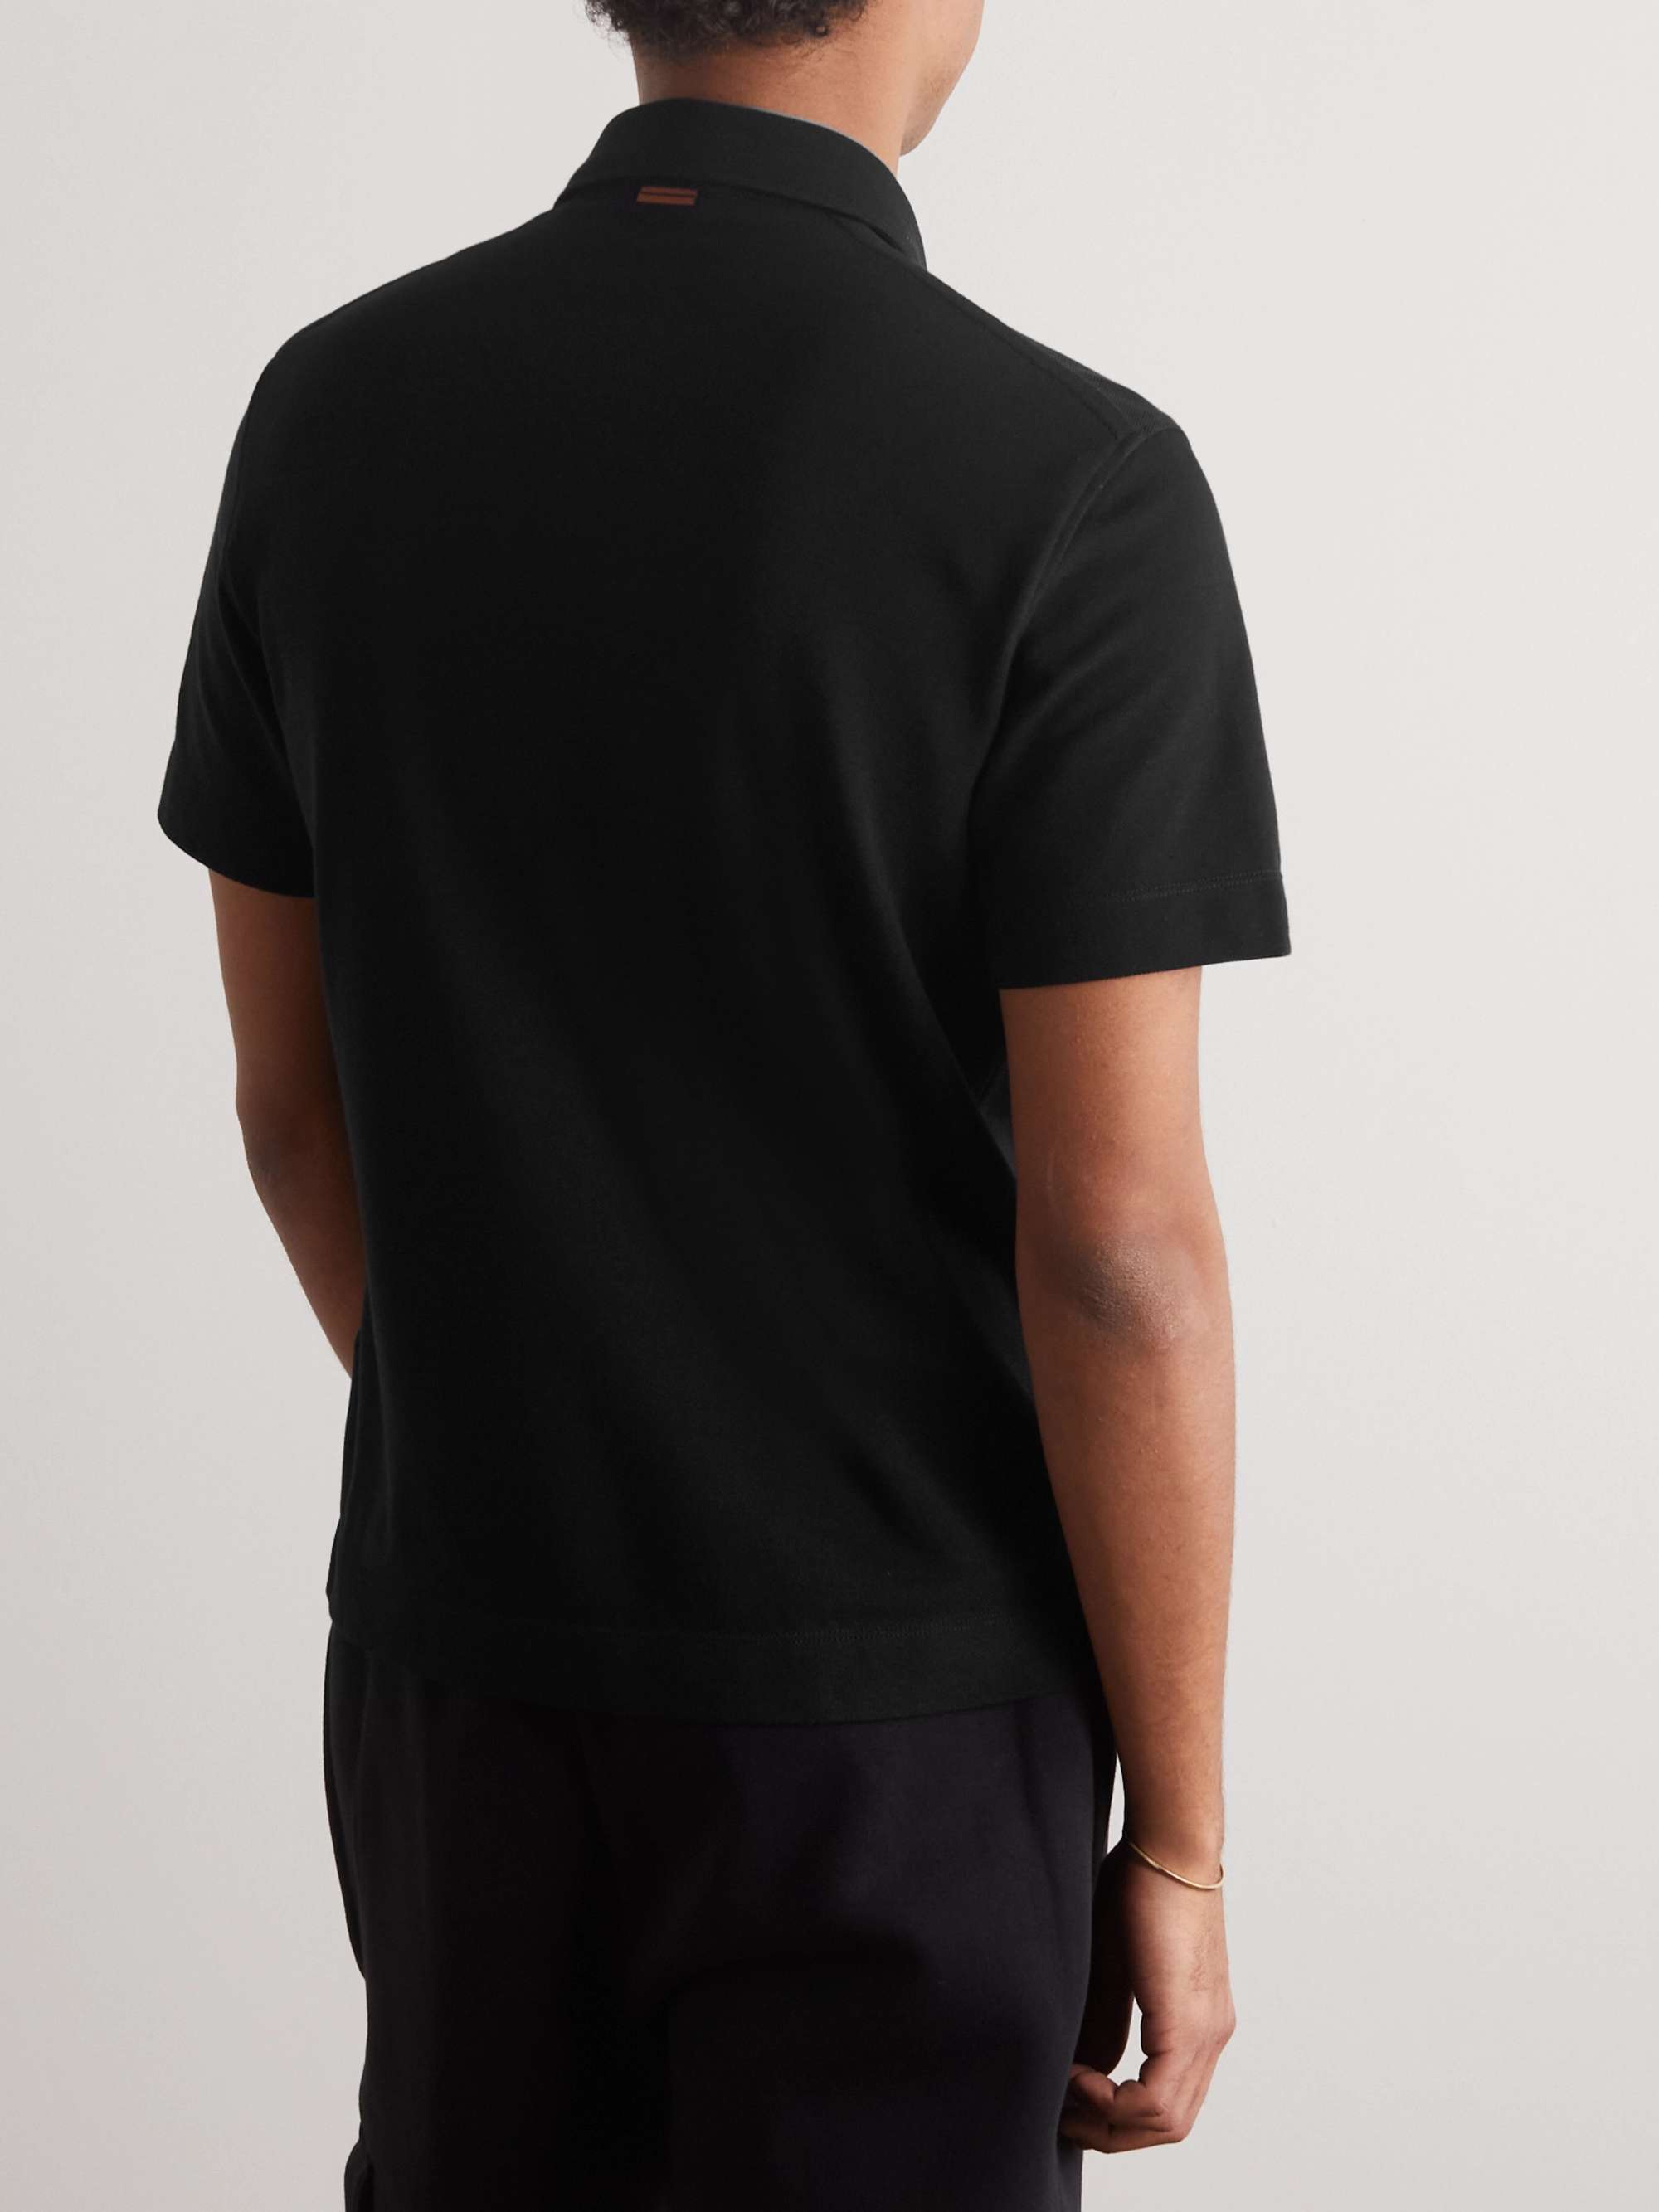 ZEGNA Leather-Trimmed Cotton-Piqué Polo Shirt for Men | MR PORTER